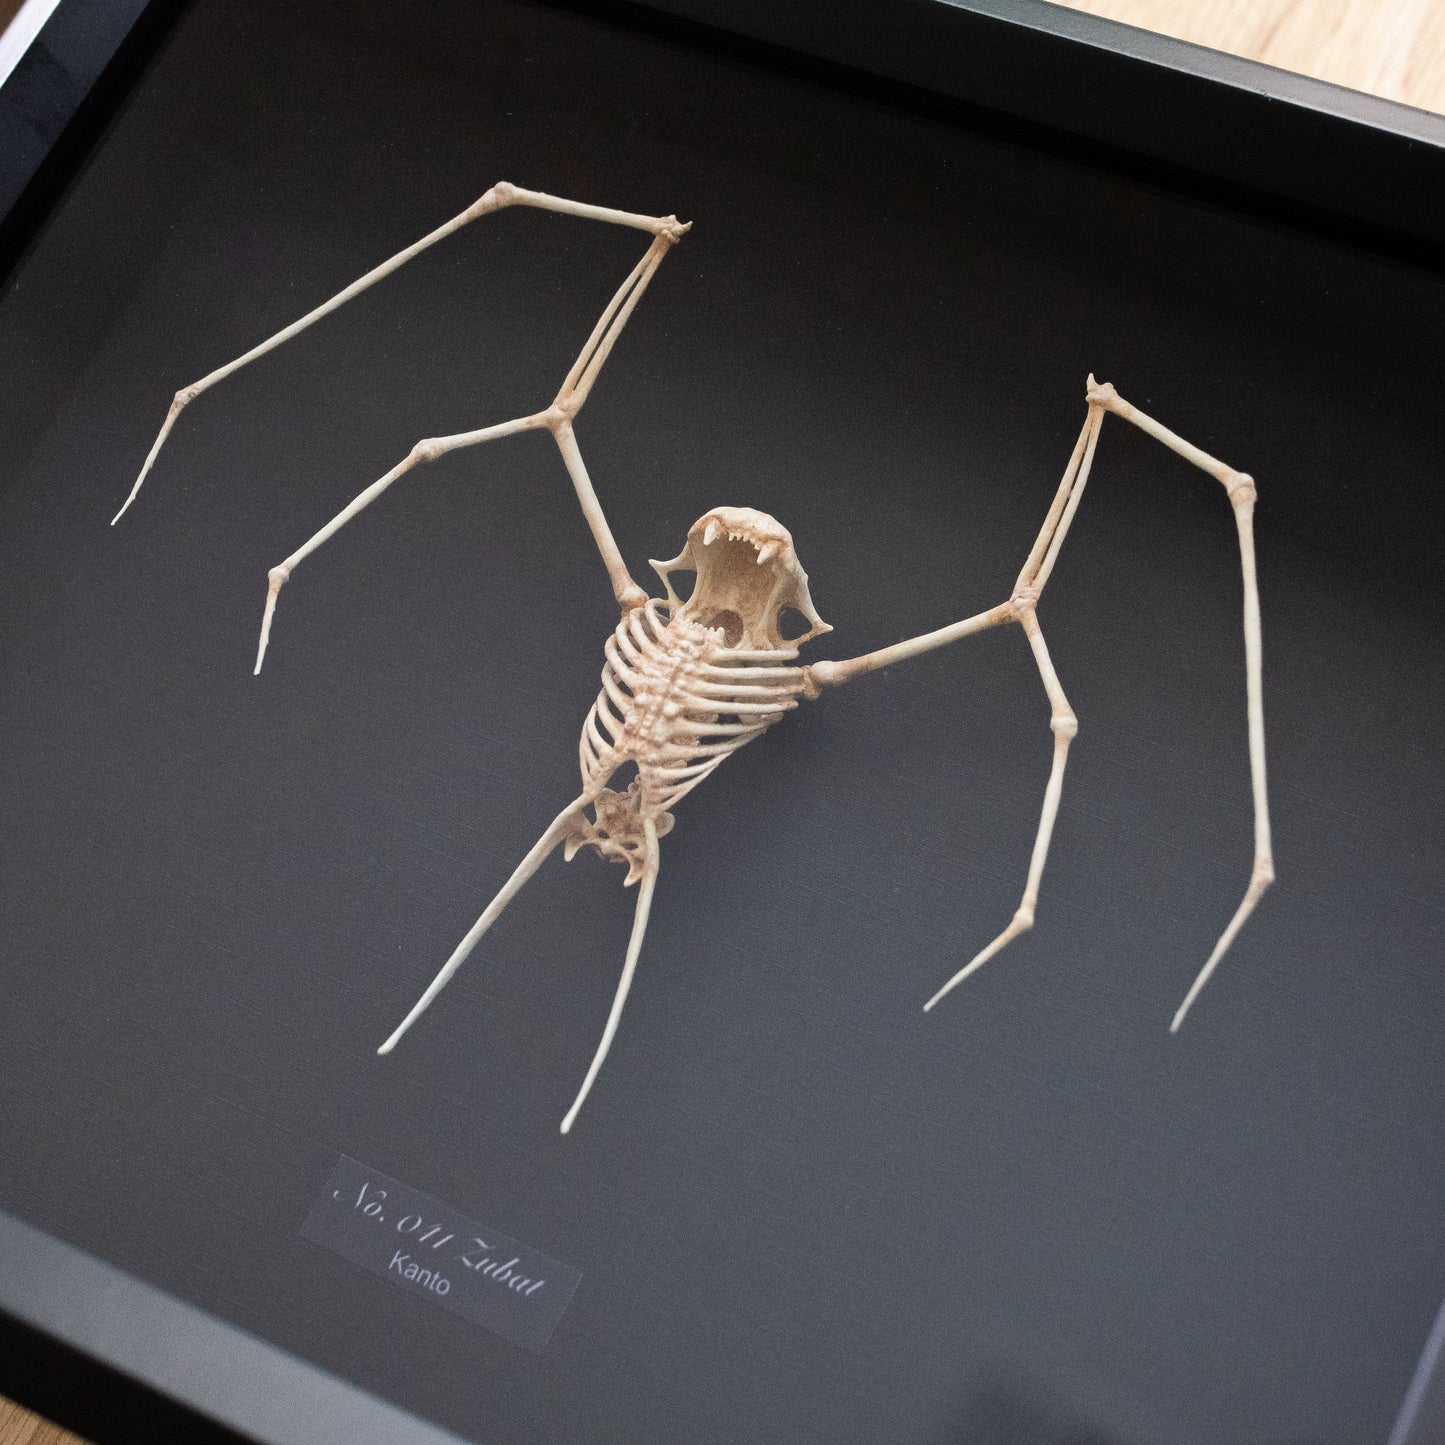 Zubat Skeleton Sculpture - Pokémon - 8x10 Shadowbox